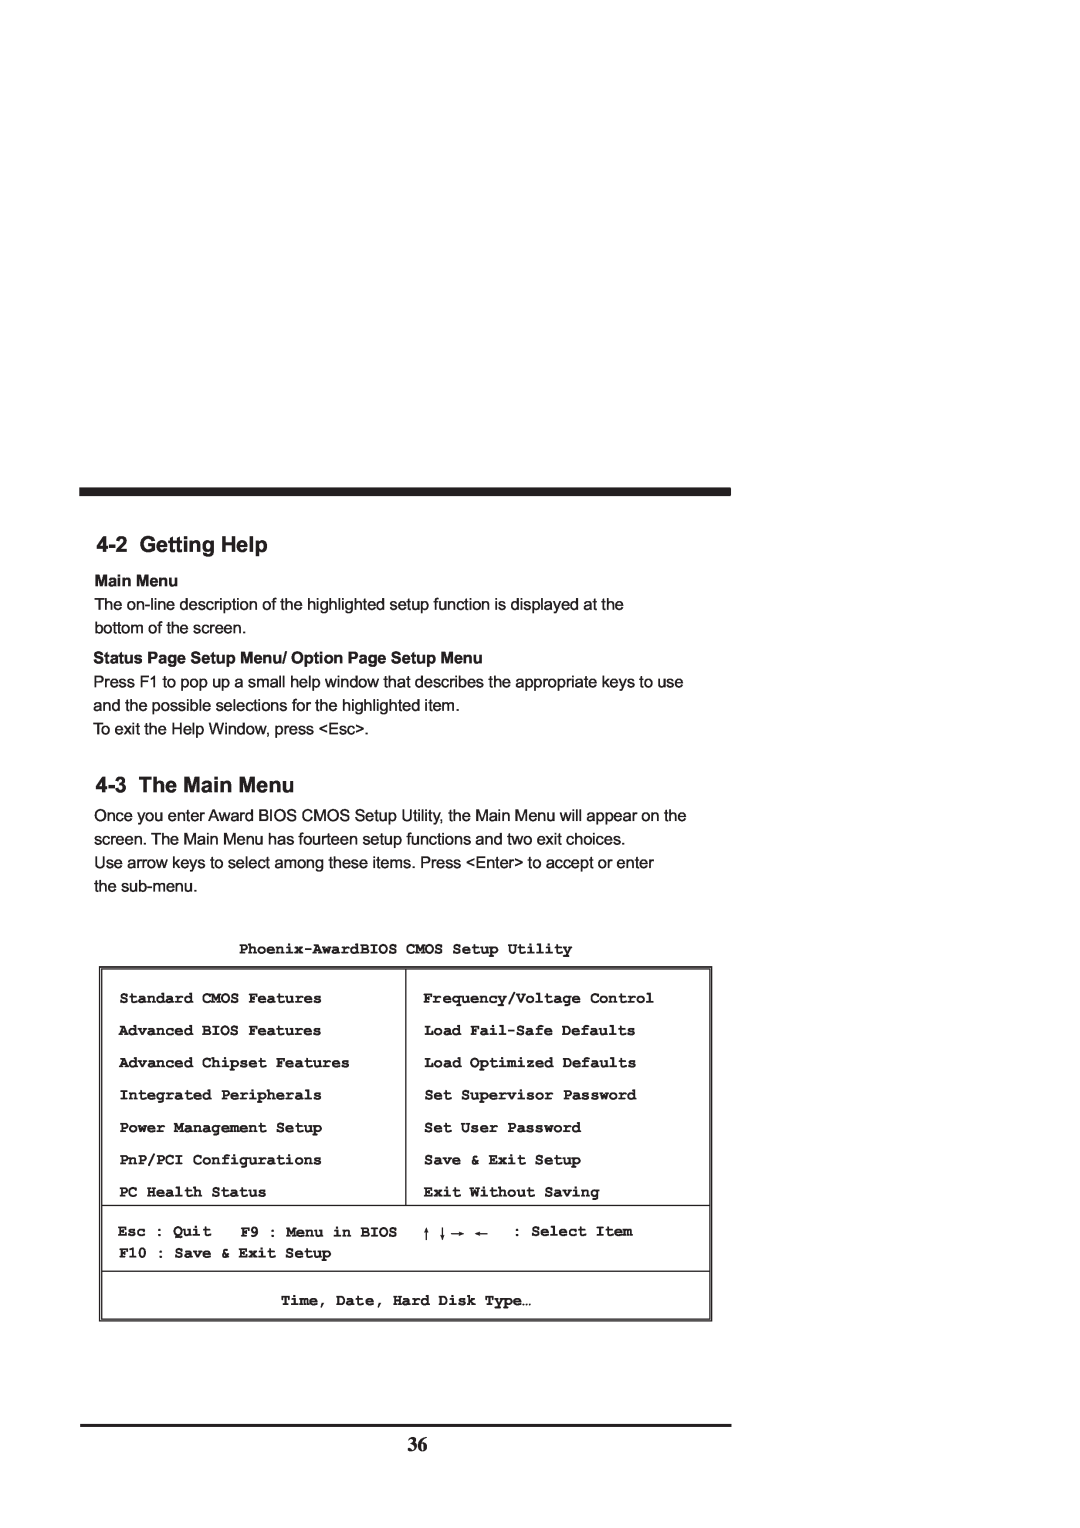 Intel CV702A, CV700A manual 4-2Getting Help, 4-3The Main Menu, Status Page Setup Menu/ Option Page Setup Menu 